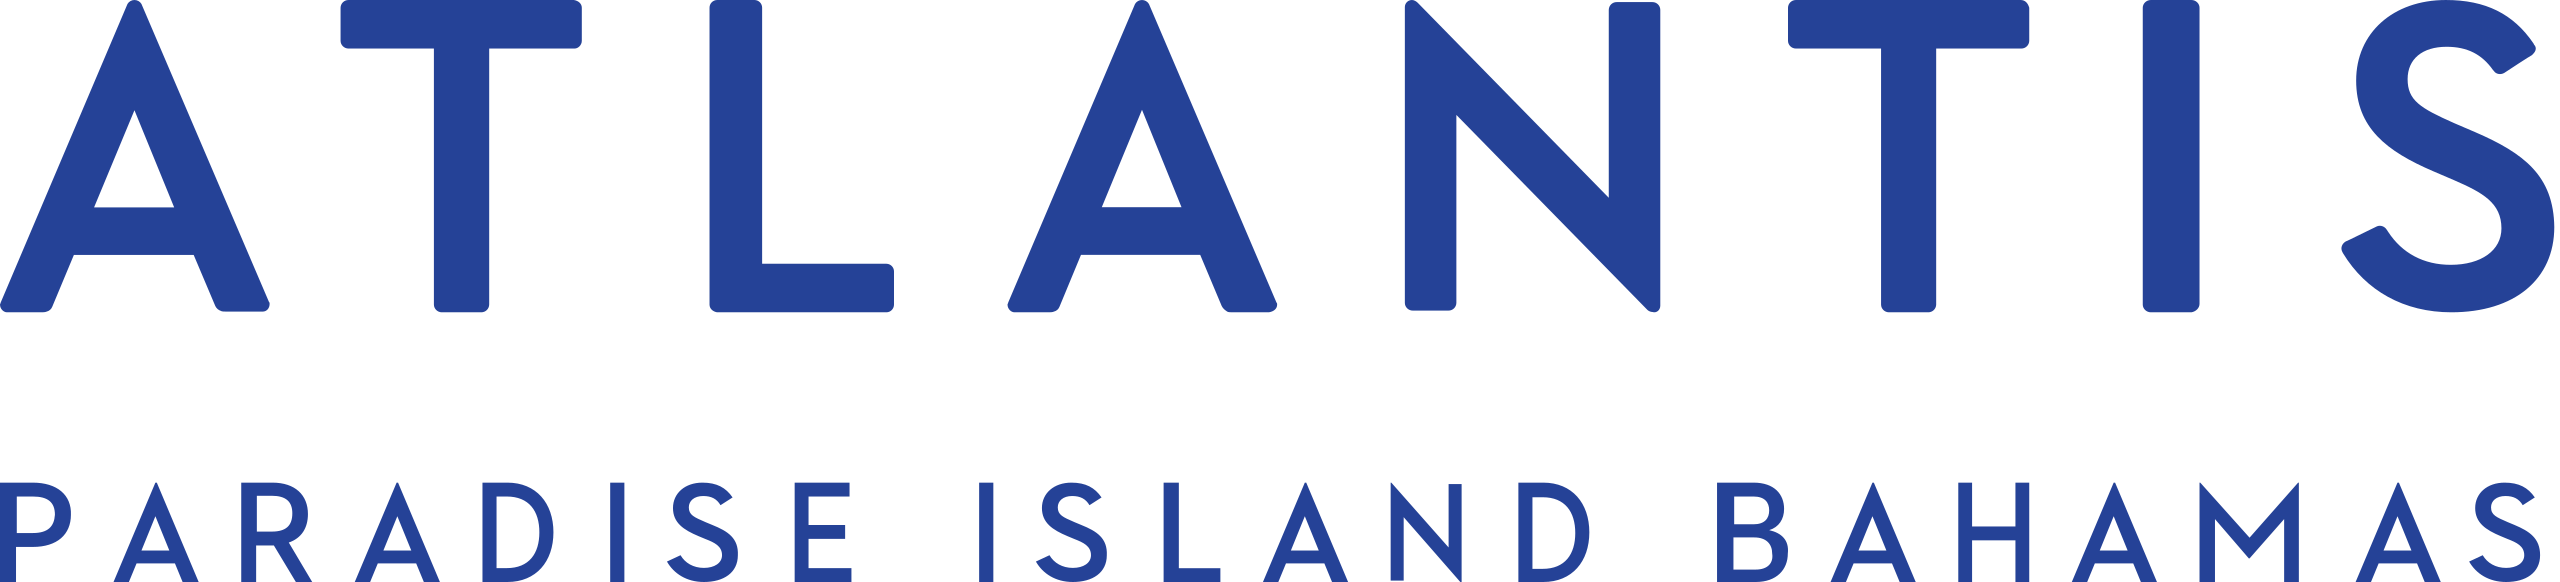 Atlantis Paradise Island - Wikipedia